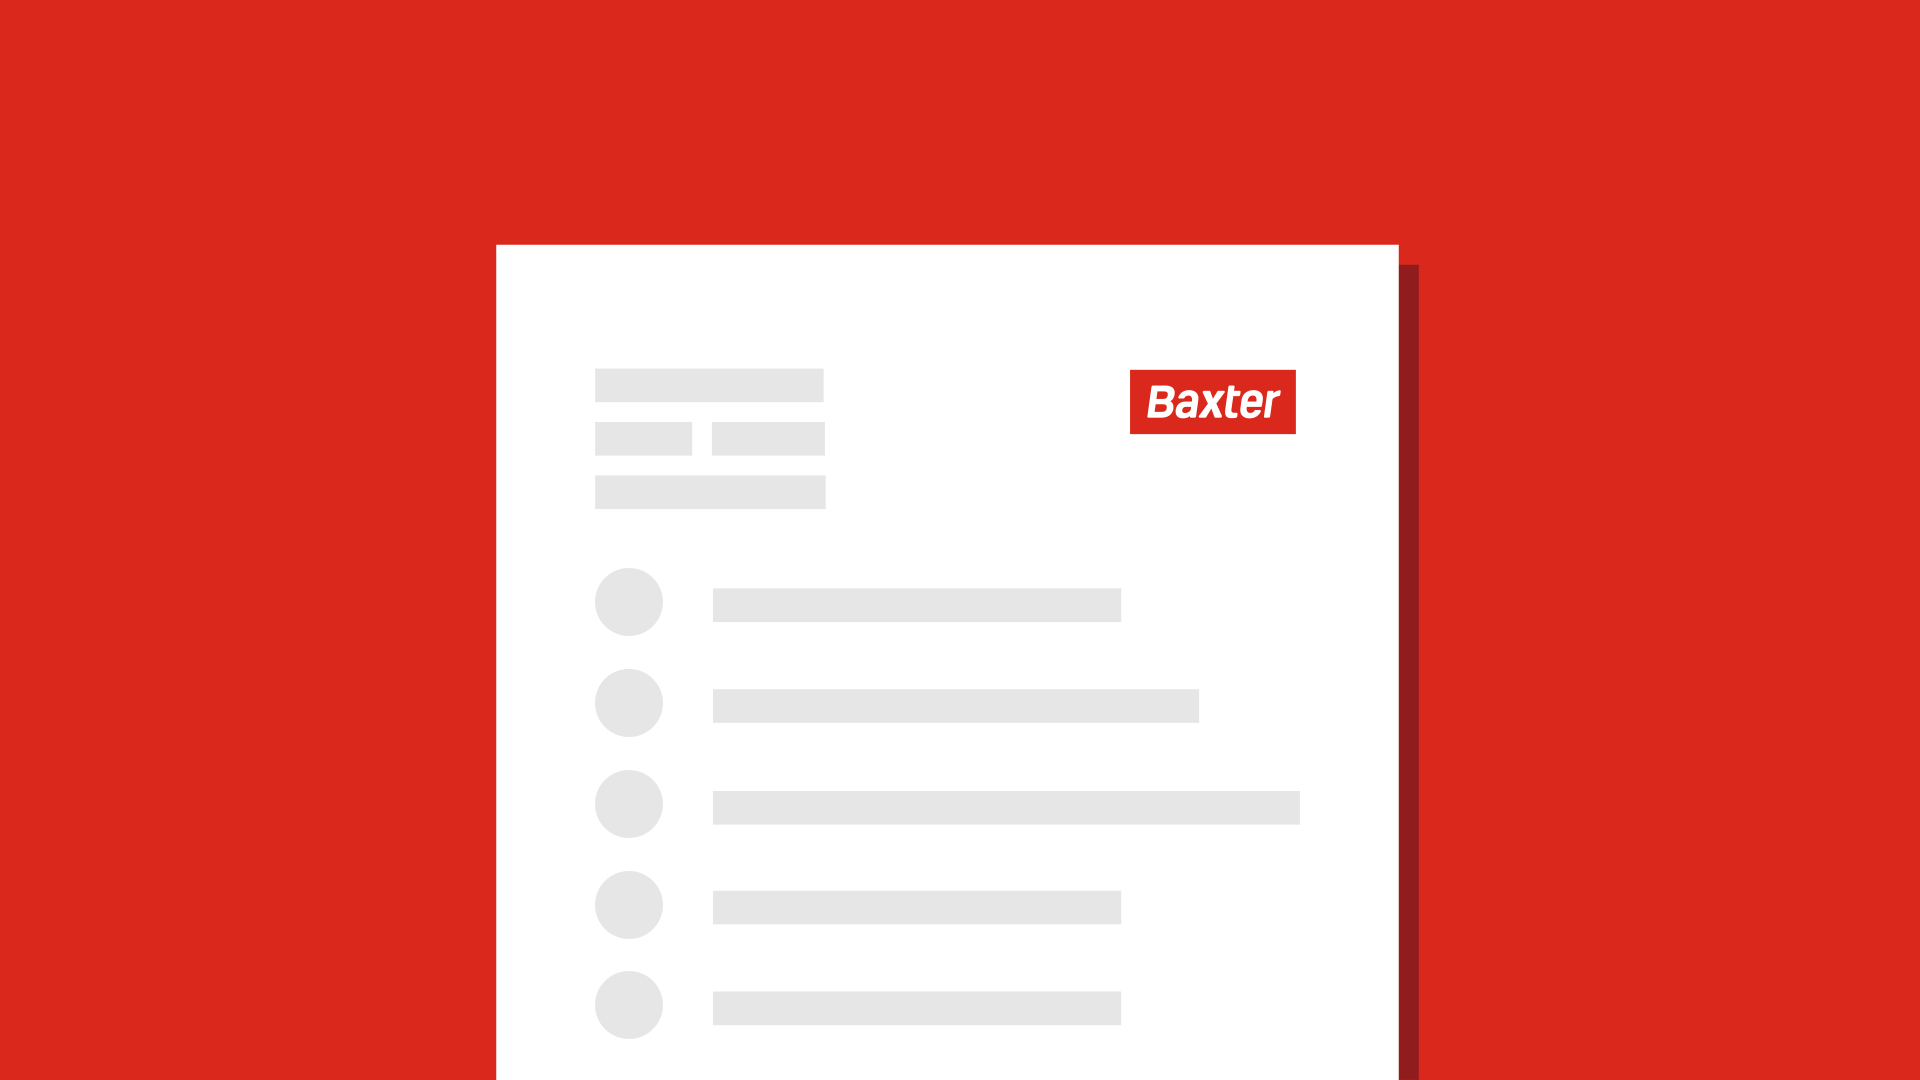 Baxter Auto Animations: Checklist Illustration